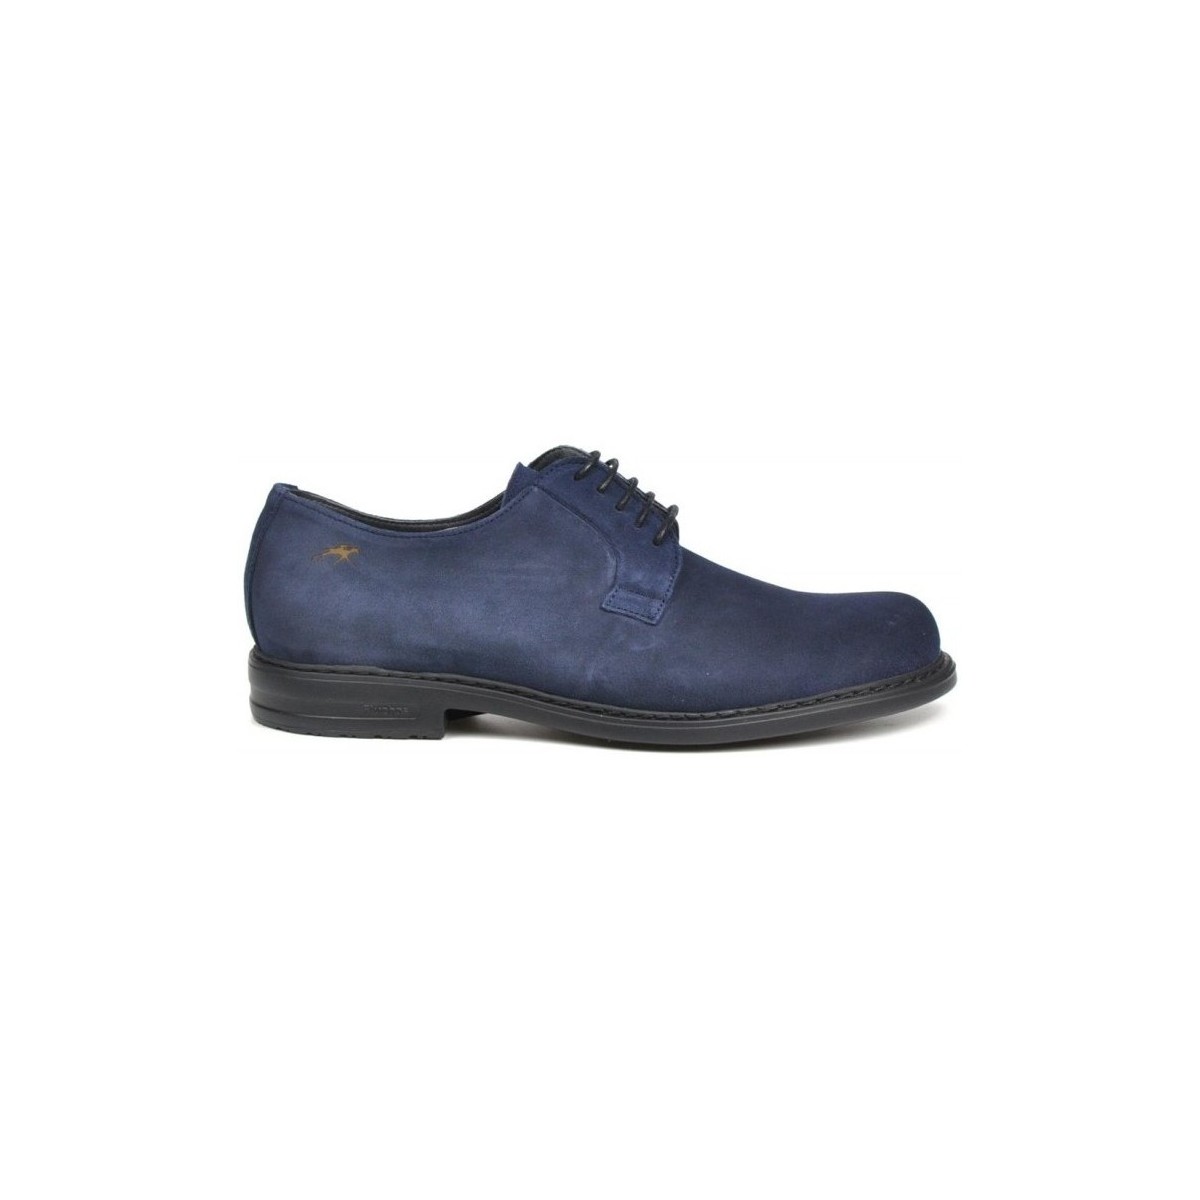 kengät Miehet Derby-kengät & Herrainkengät Fluchos Simon 8467 Azul Sininen